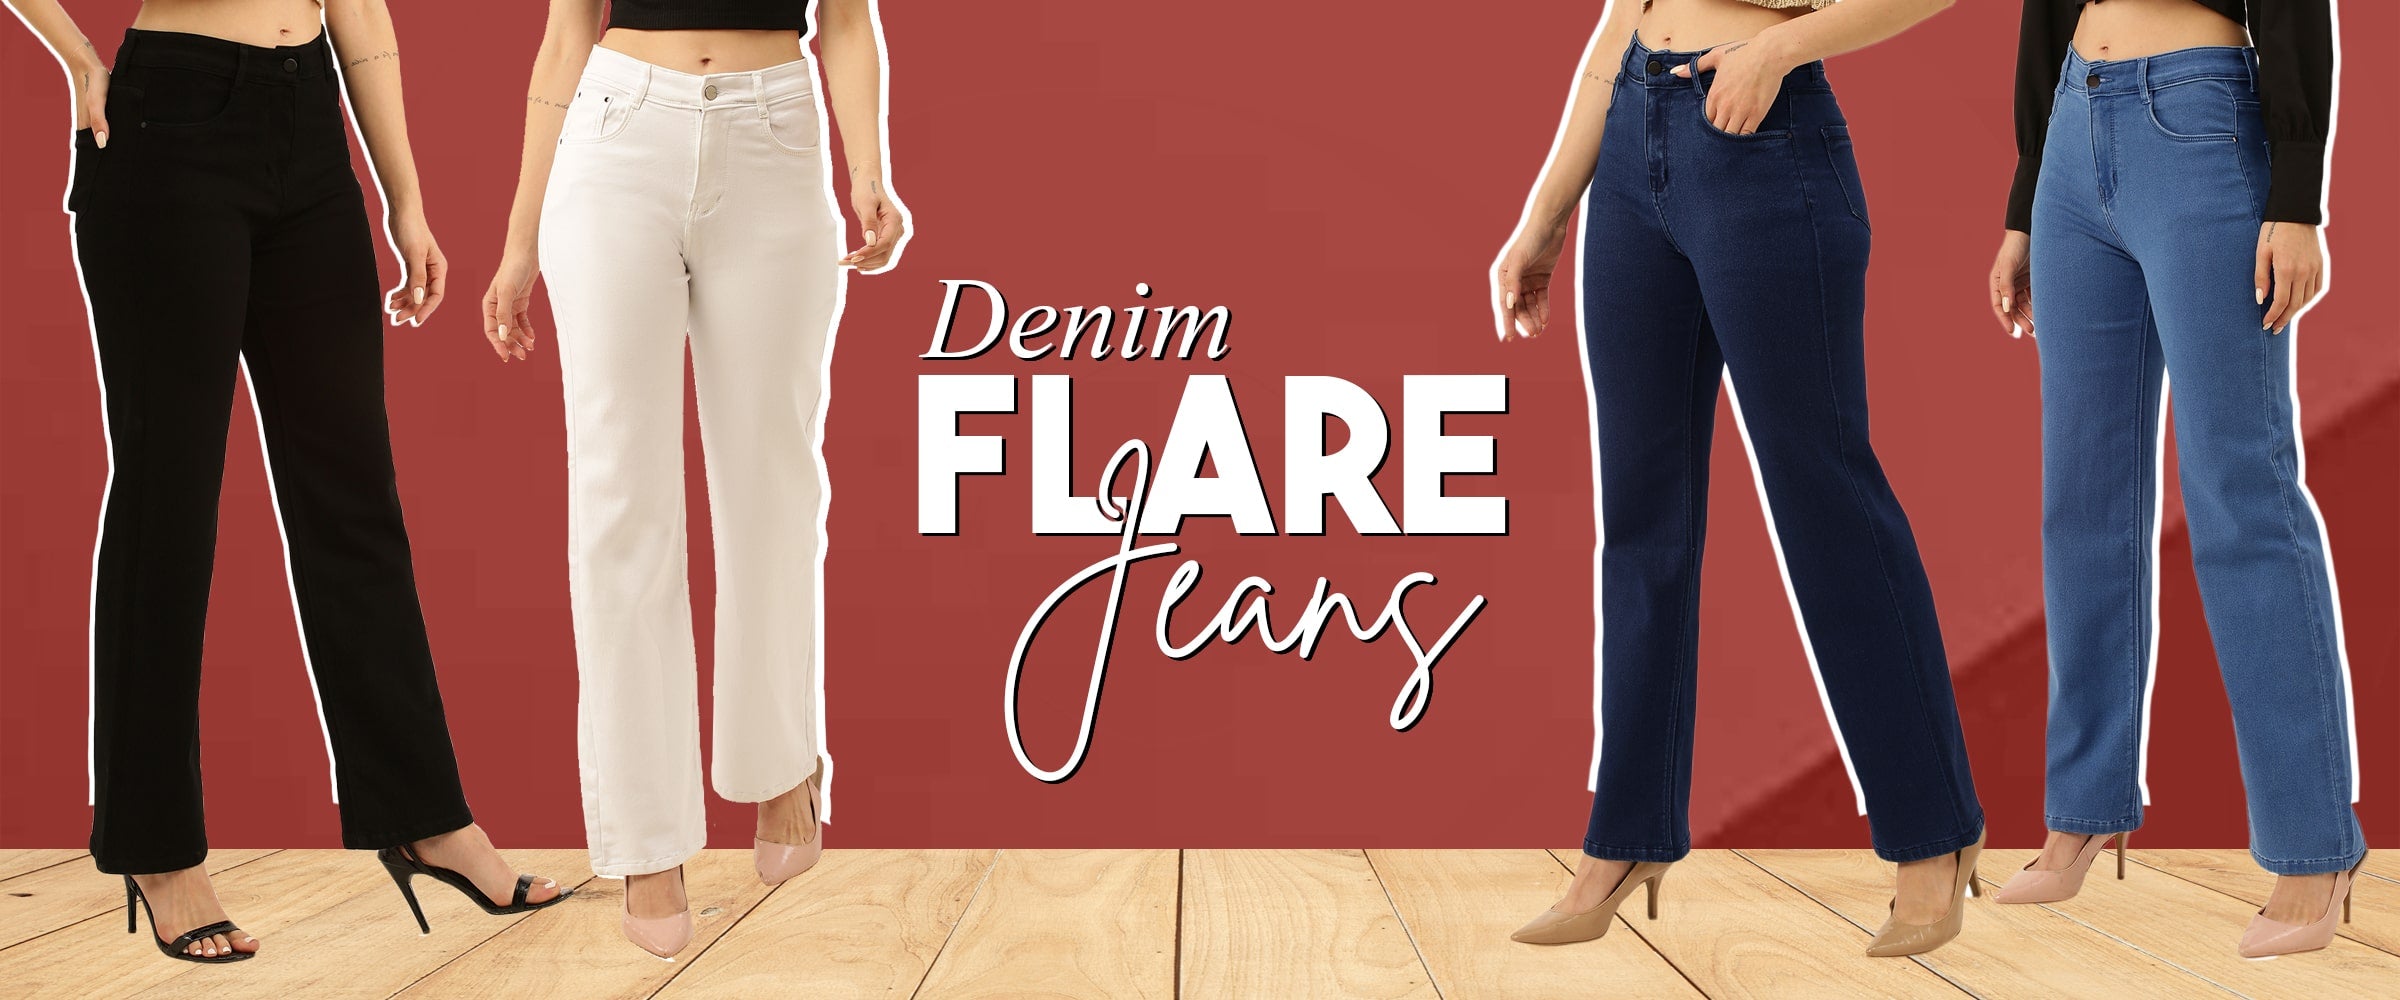 Dark Blue Flared Jeans – Peach Tights